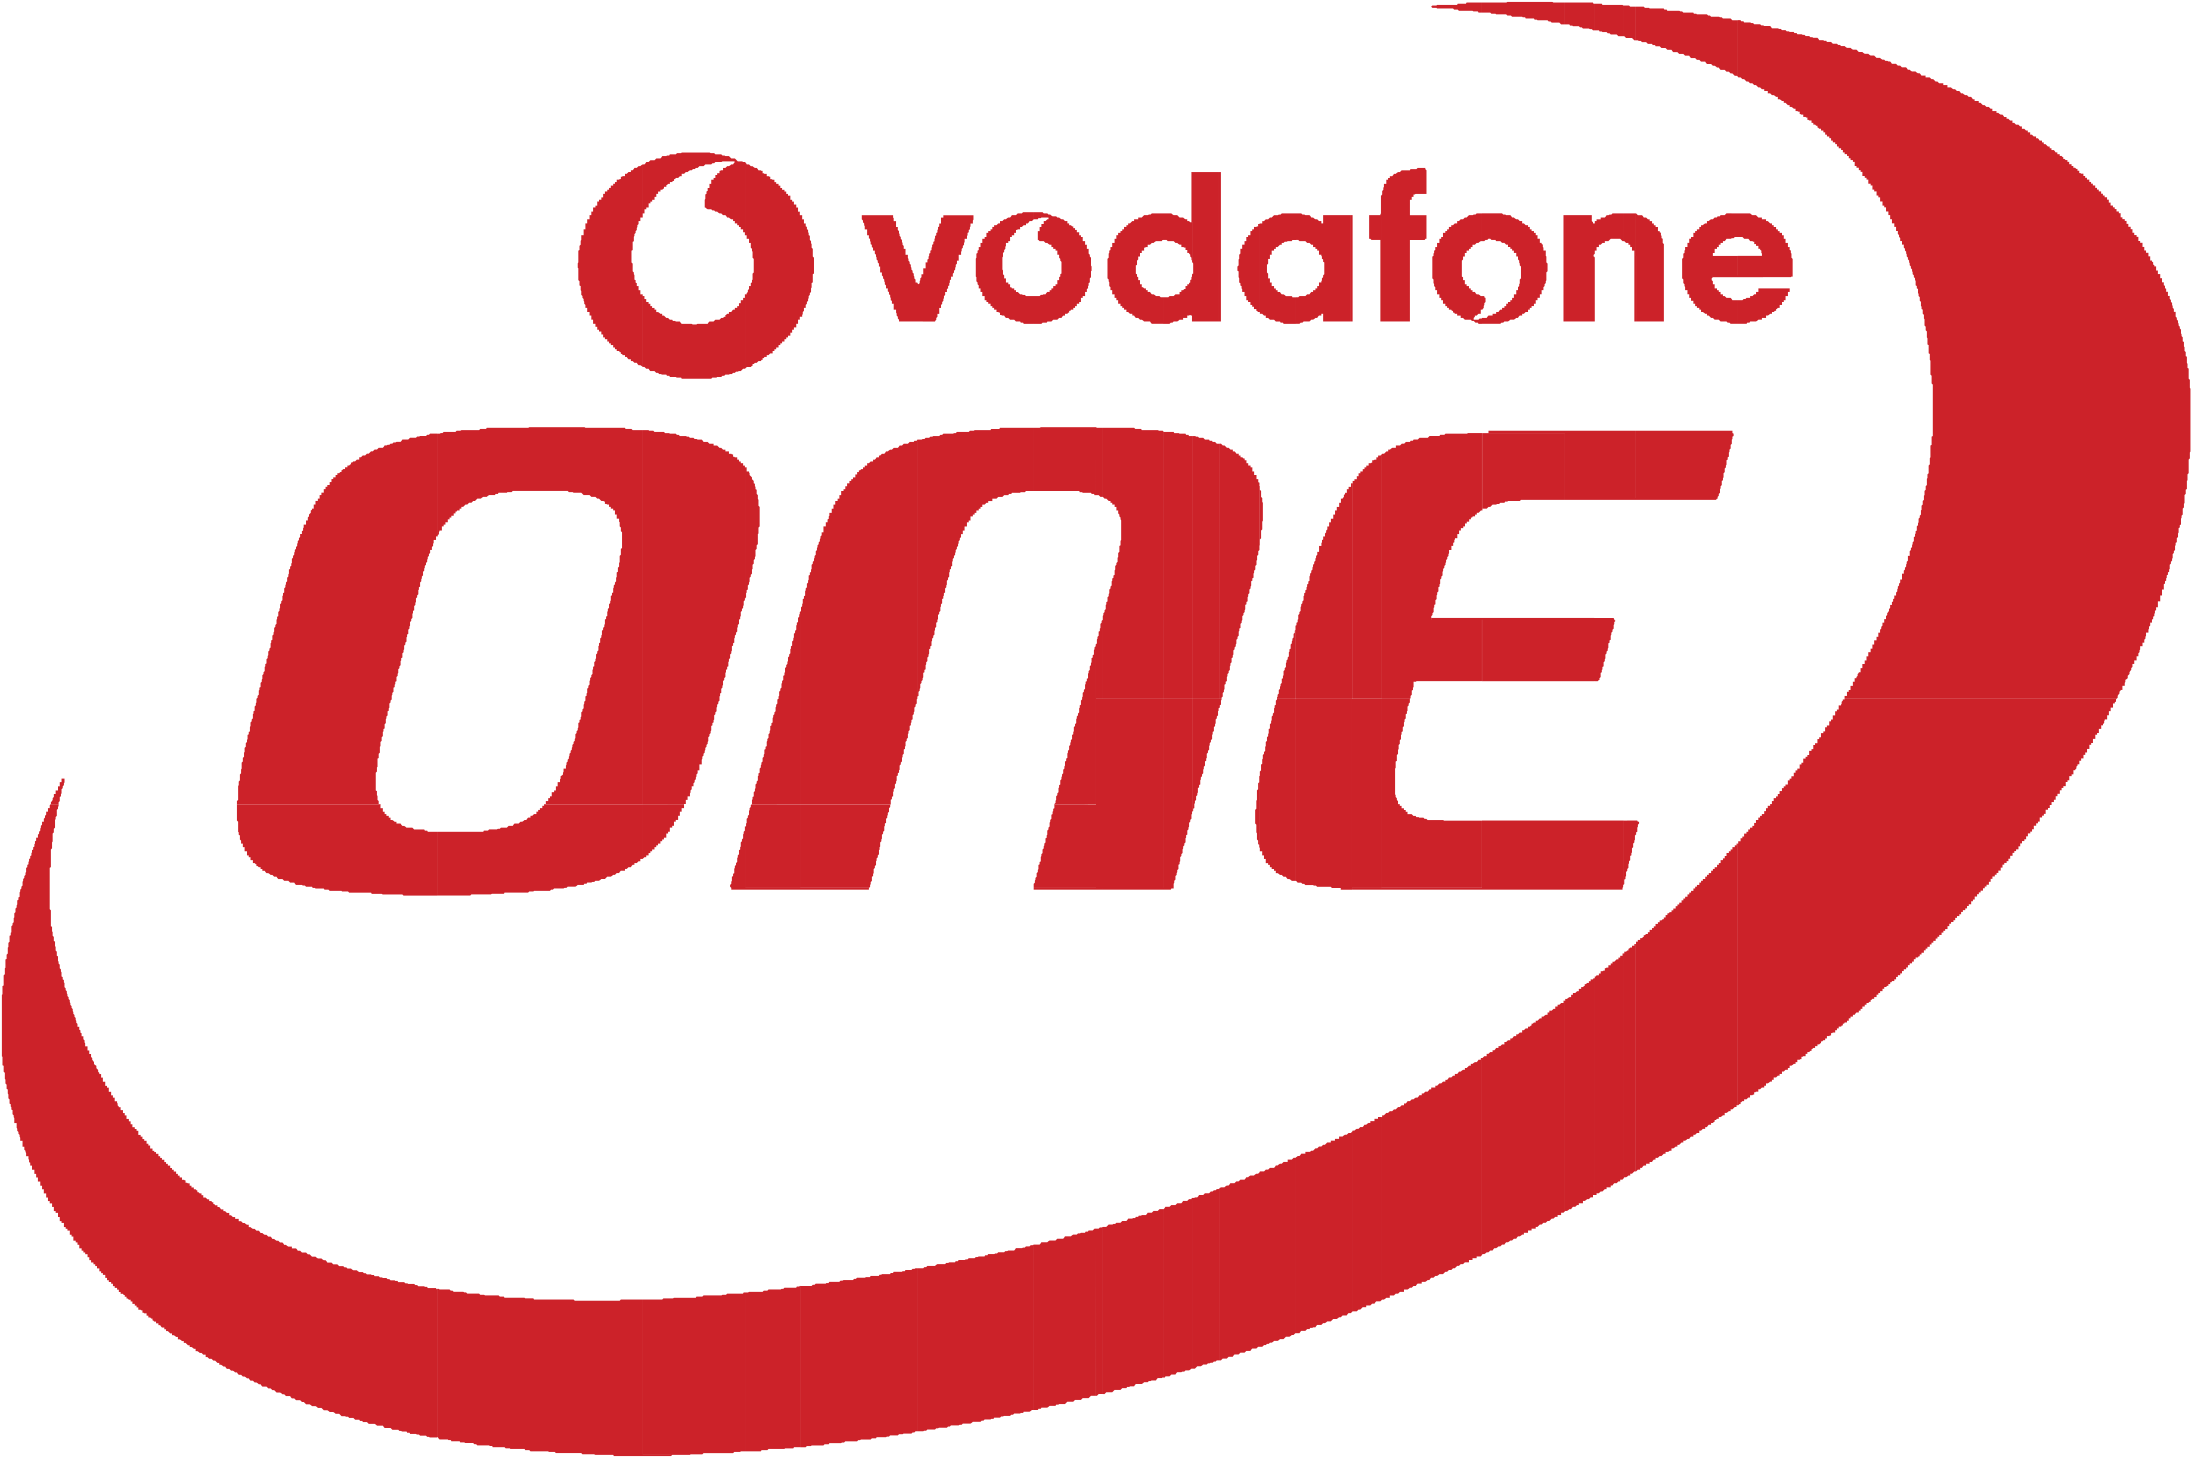 Vodafone One Logo Branding